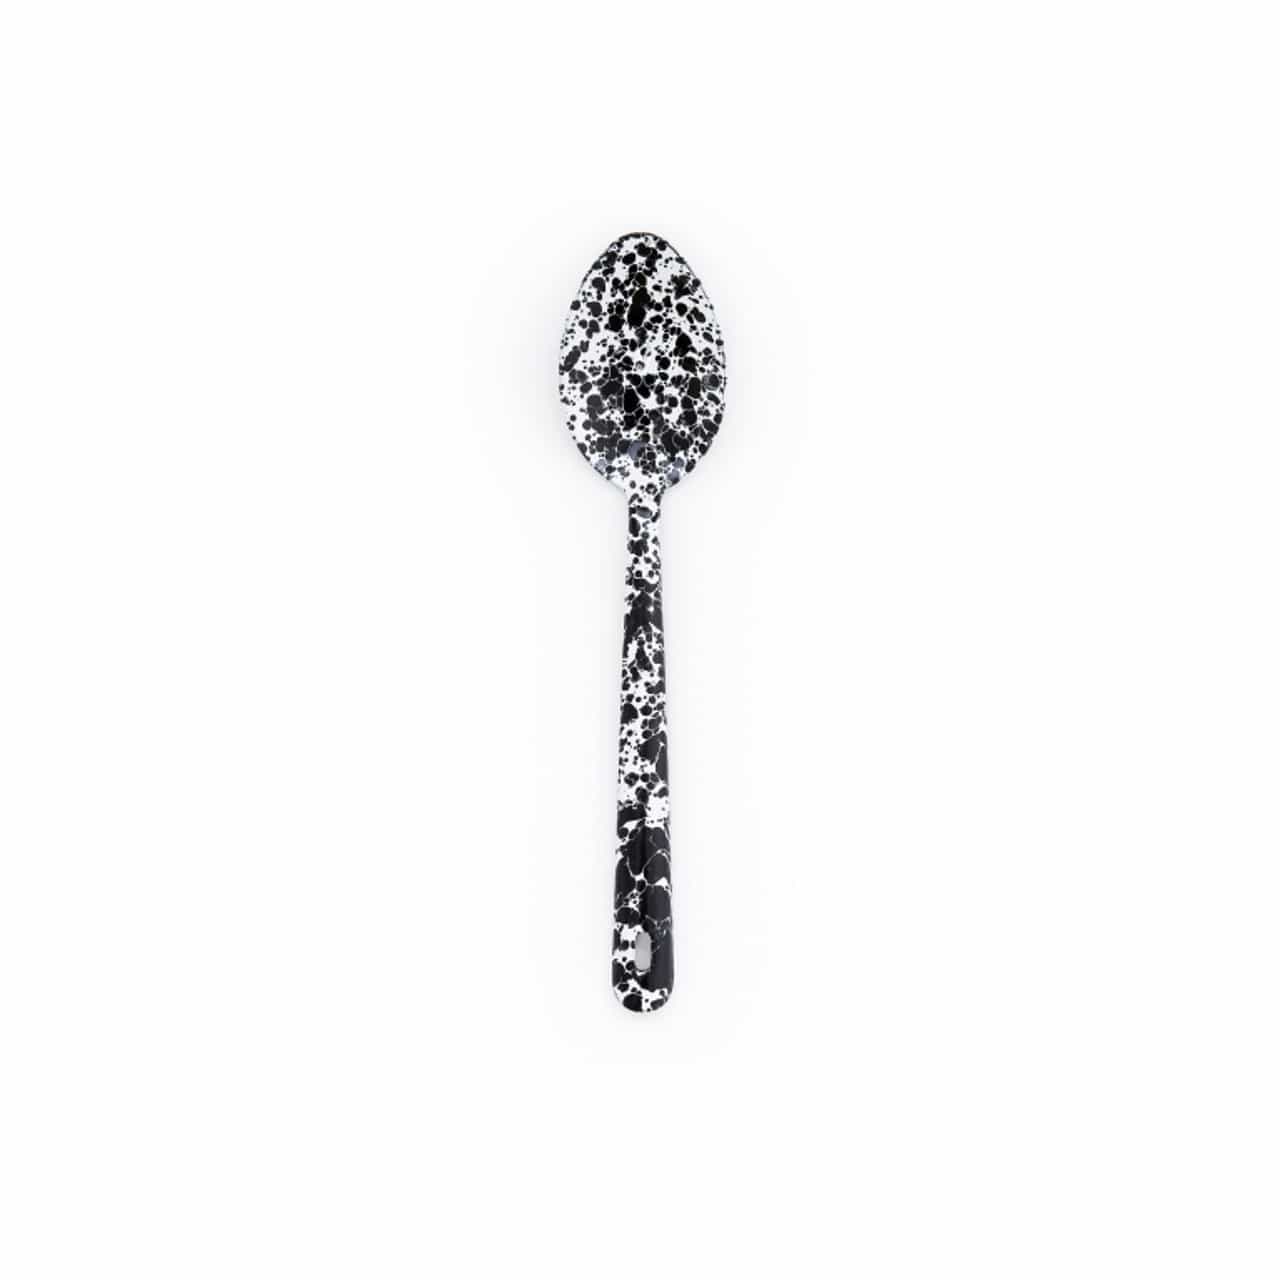 Large Spoon - Black Splatter